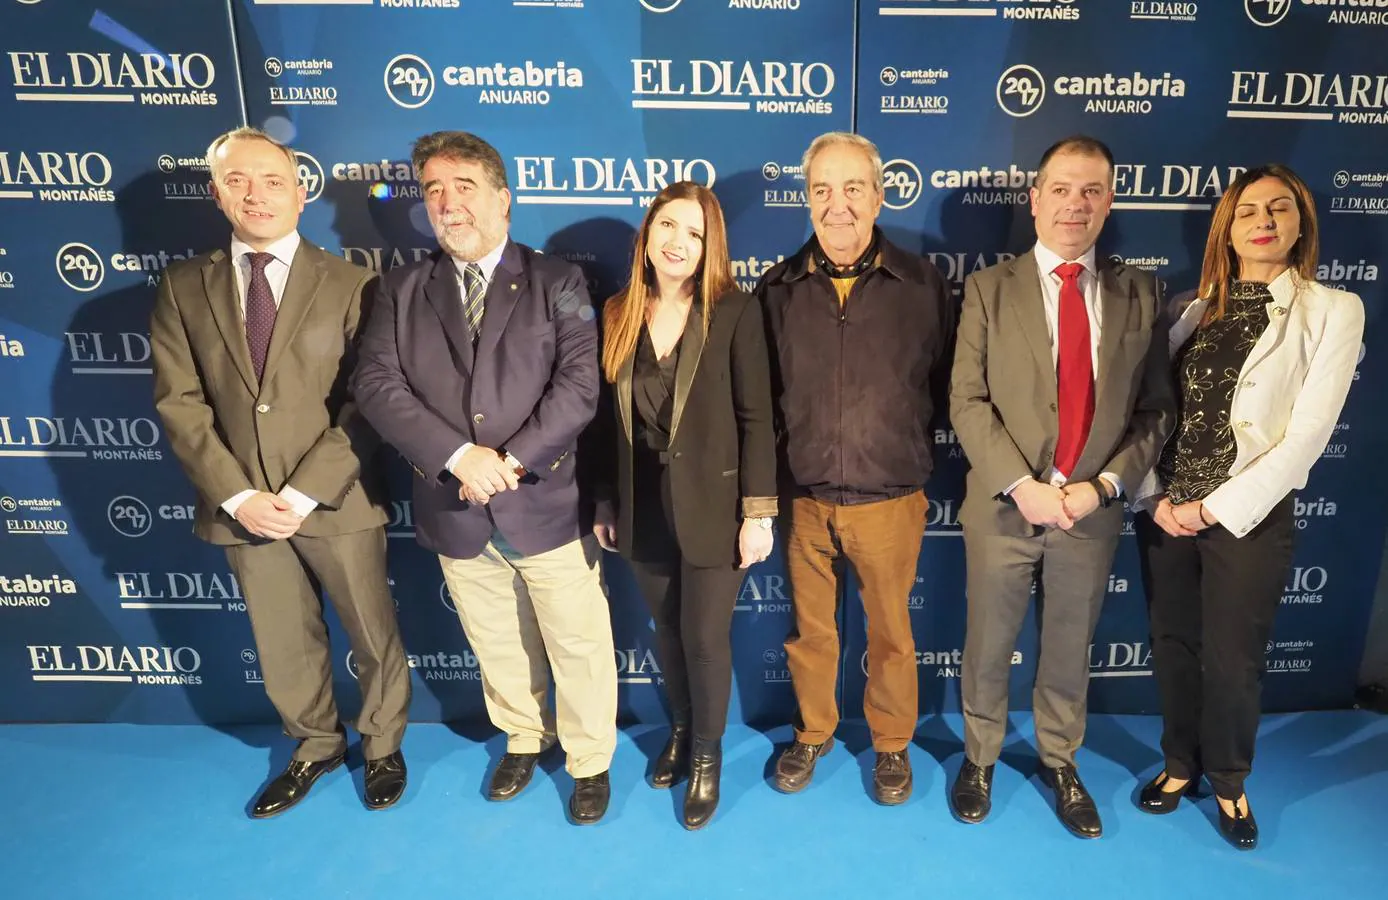 Fernando Sebrango, José Antonio Sañudo, Elvira Sañudo, Alfredo Michelena, Rubén Calderón y Carmen López.